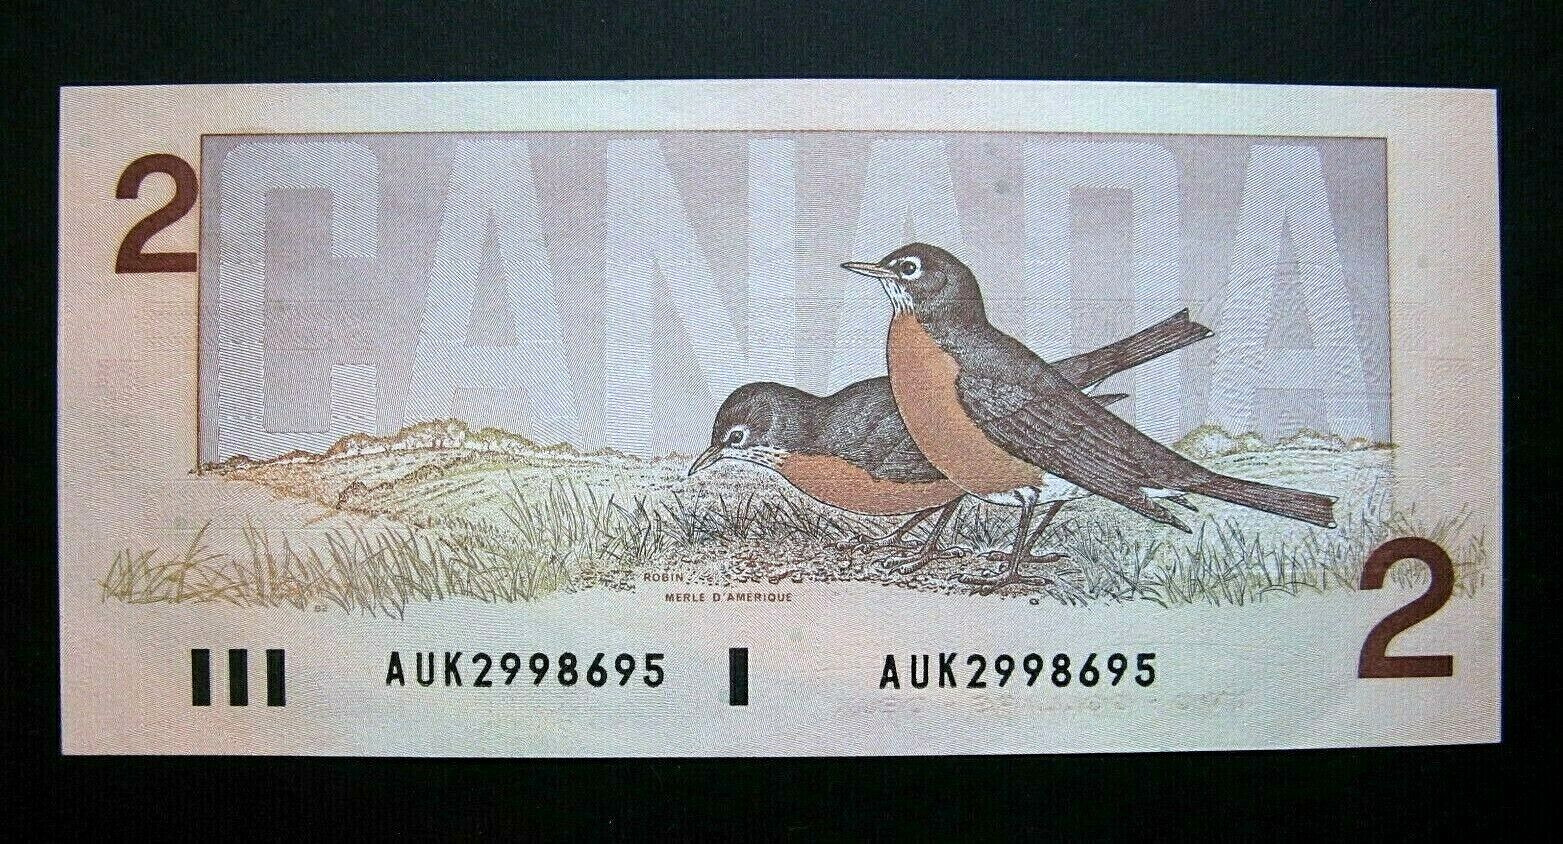 1986, $2 Dollars Bank of Canada, Crow Bouey Signature, AUK Prefix Circulated